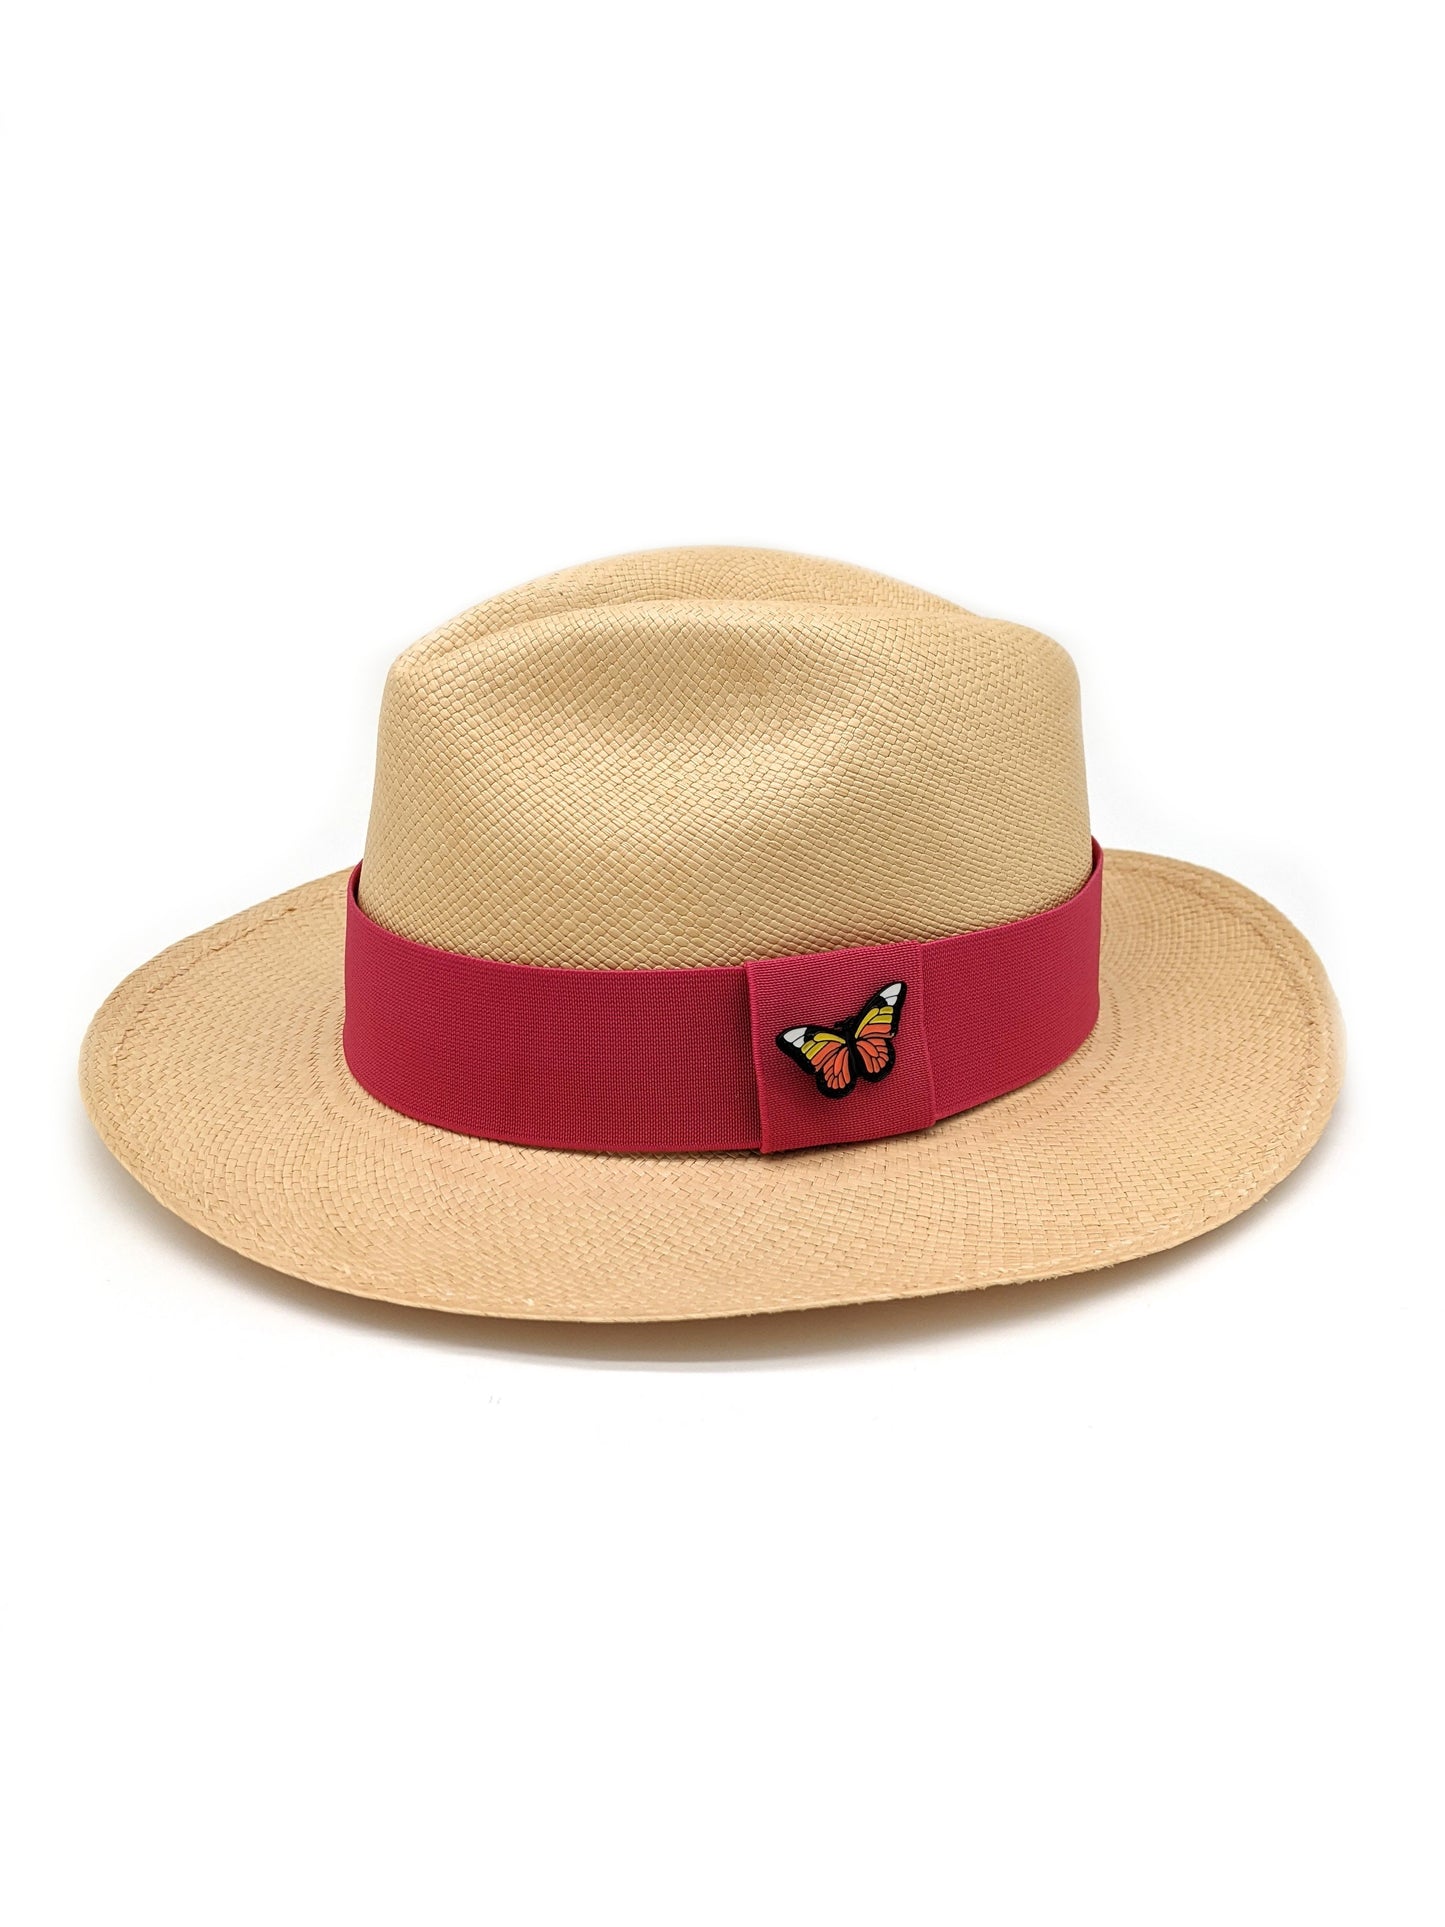 Hat Pin - Butterfly